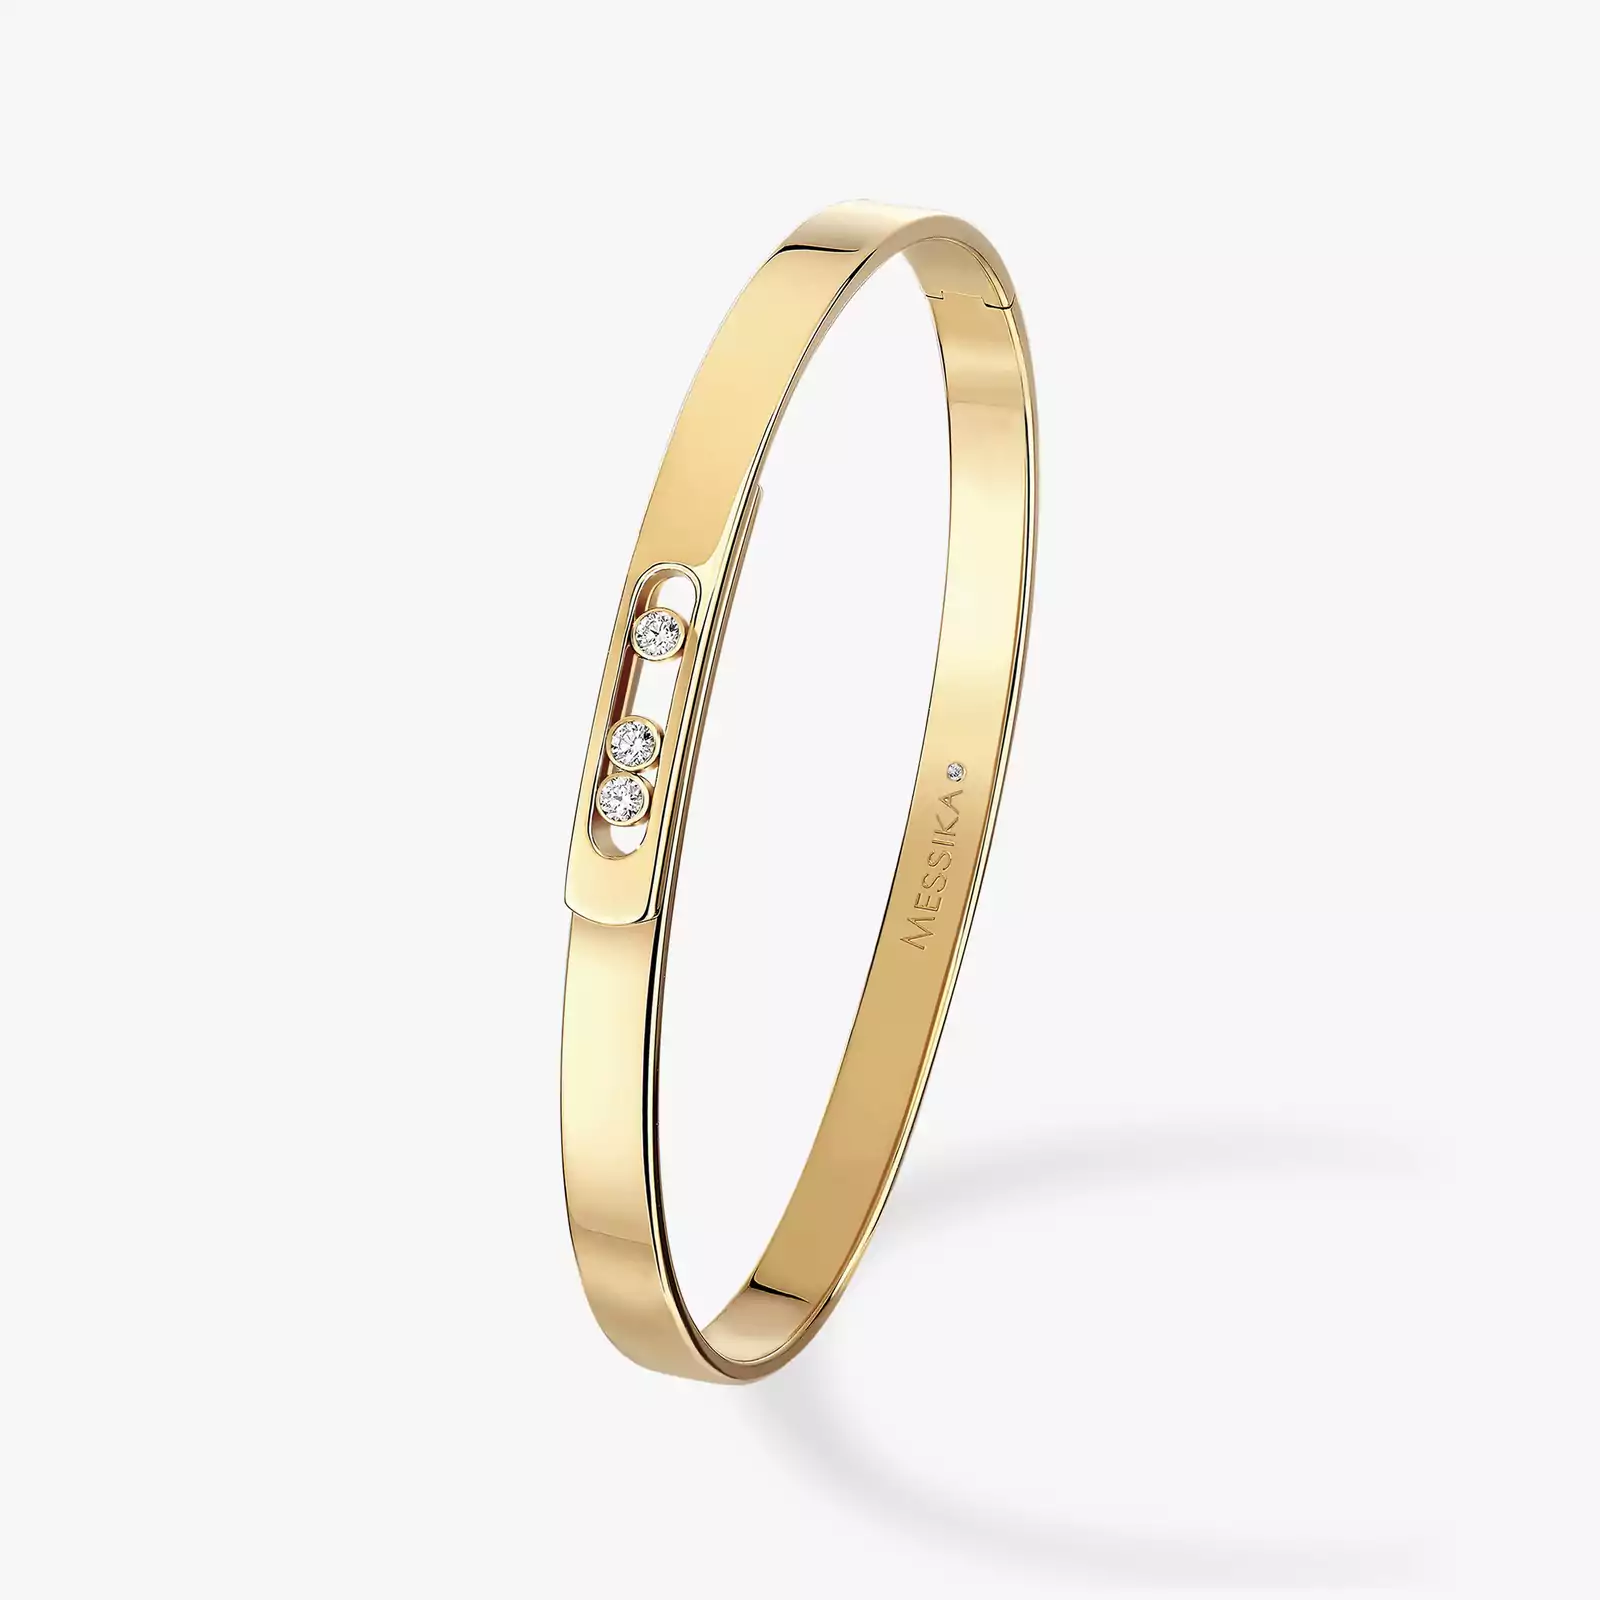 Bracelet Mixed Yellow Gold Diamond Move Noa SM Bangle Large Size 11640-YG